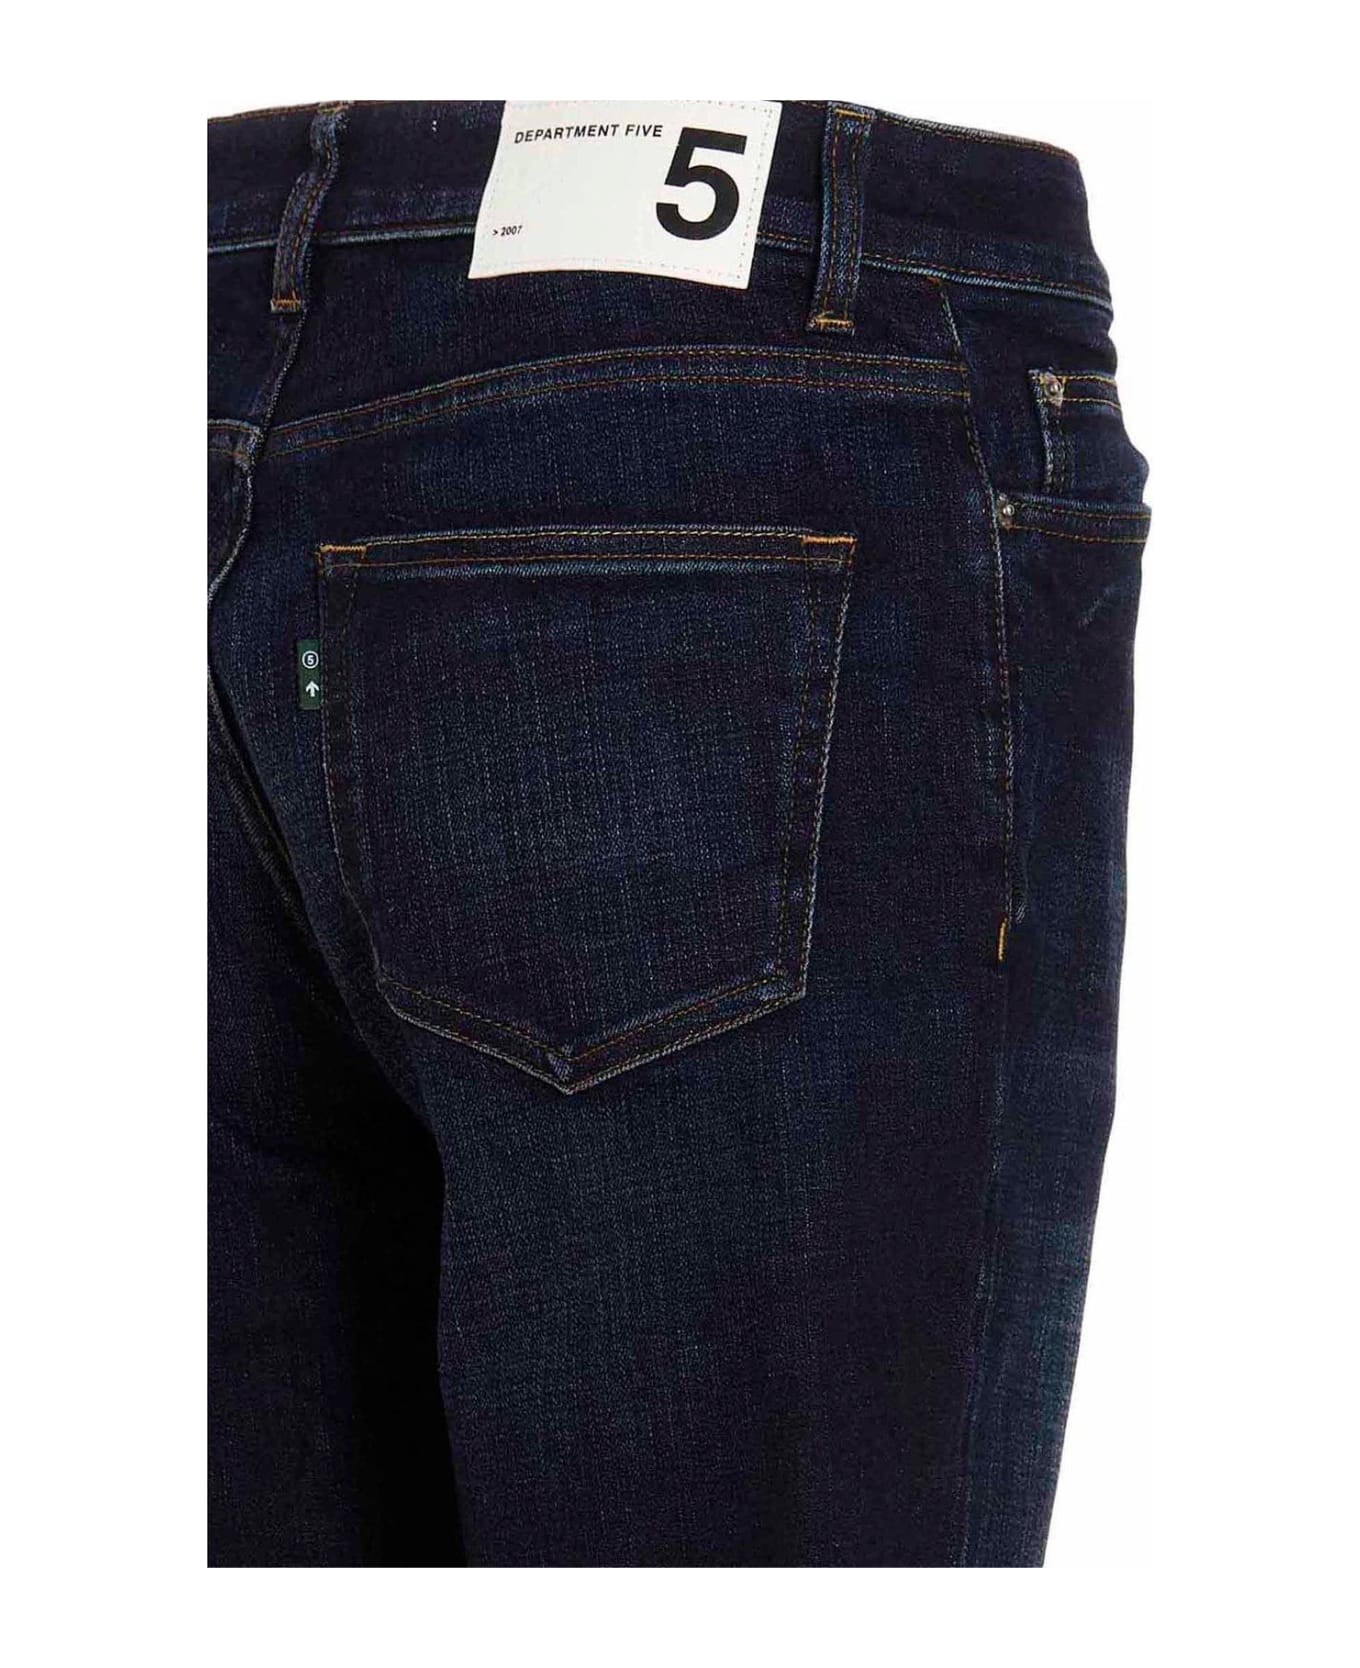 Department Five Drake Slim Fit Jeans - Blue